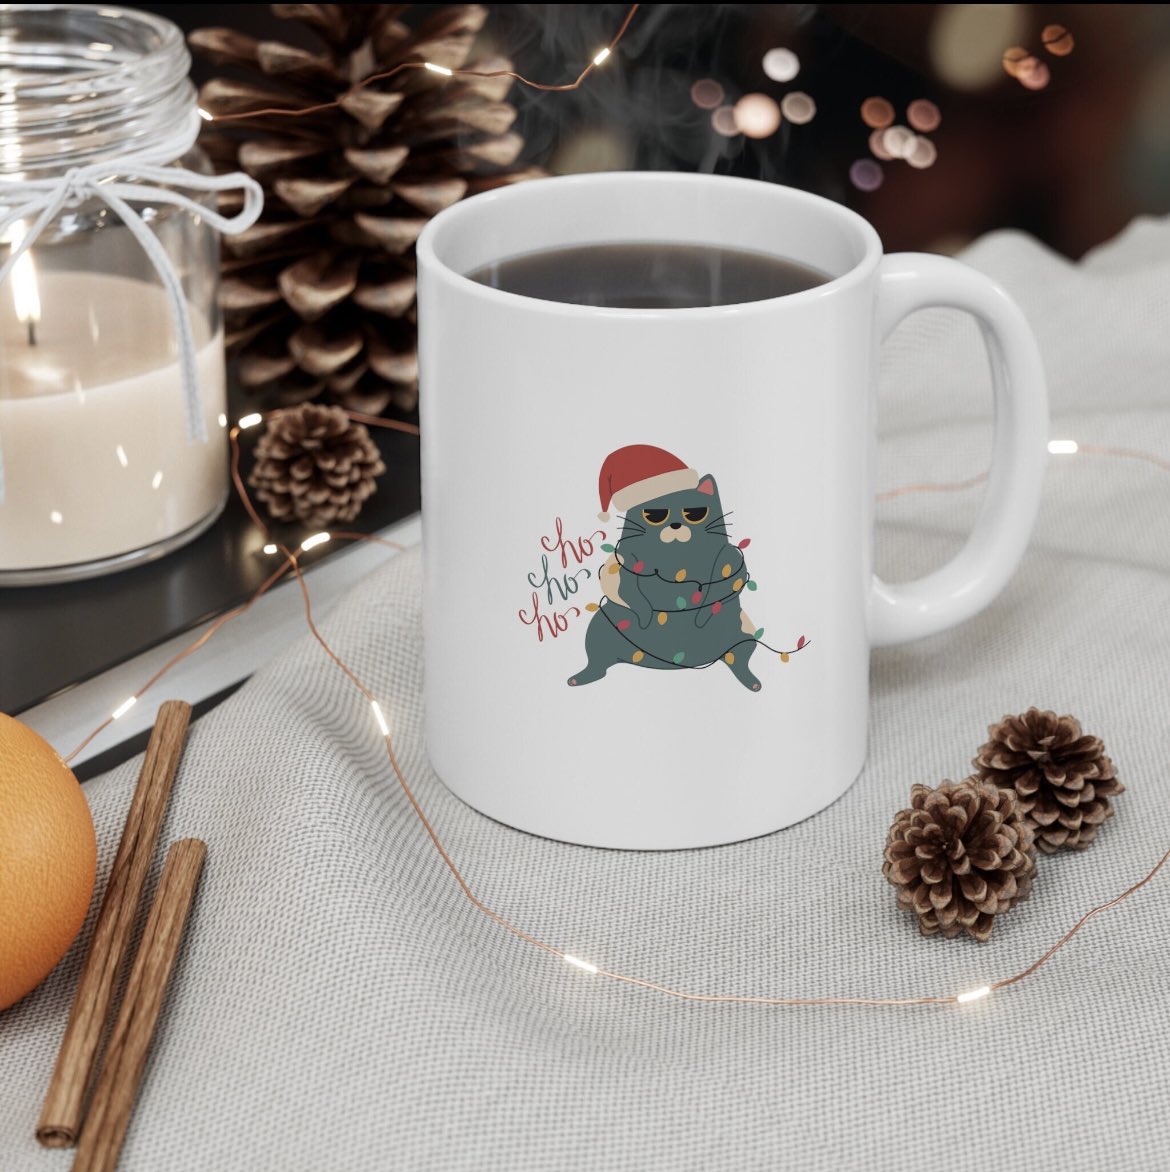 Cat Christmas mug in Etsy shop! So cute🥰 
Free shipping to U.S and Canada! Link in bio. #christmasmug #catmug #gift #etsyshop #SmallBusiness